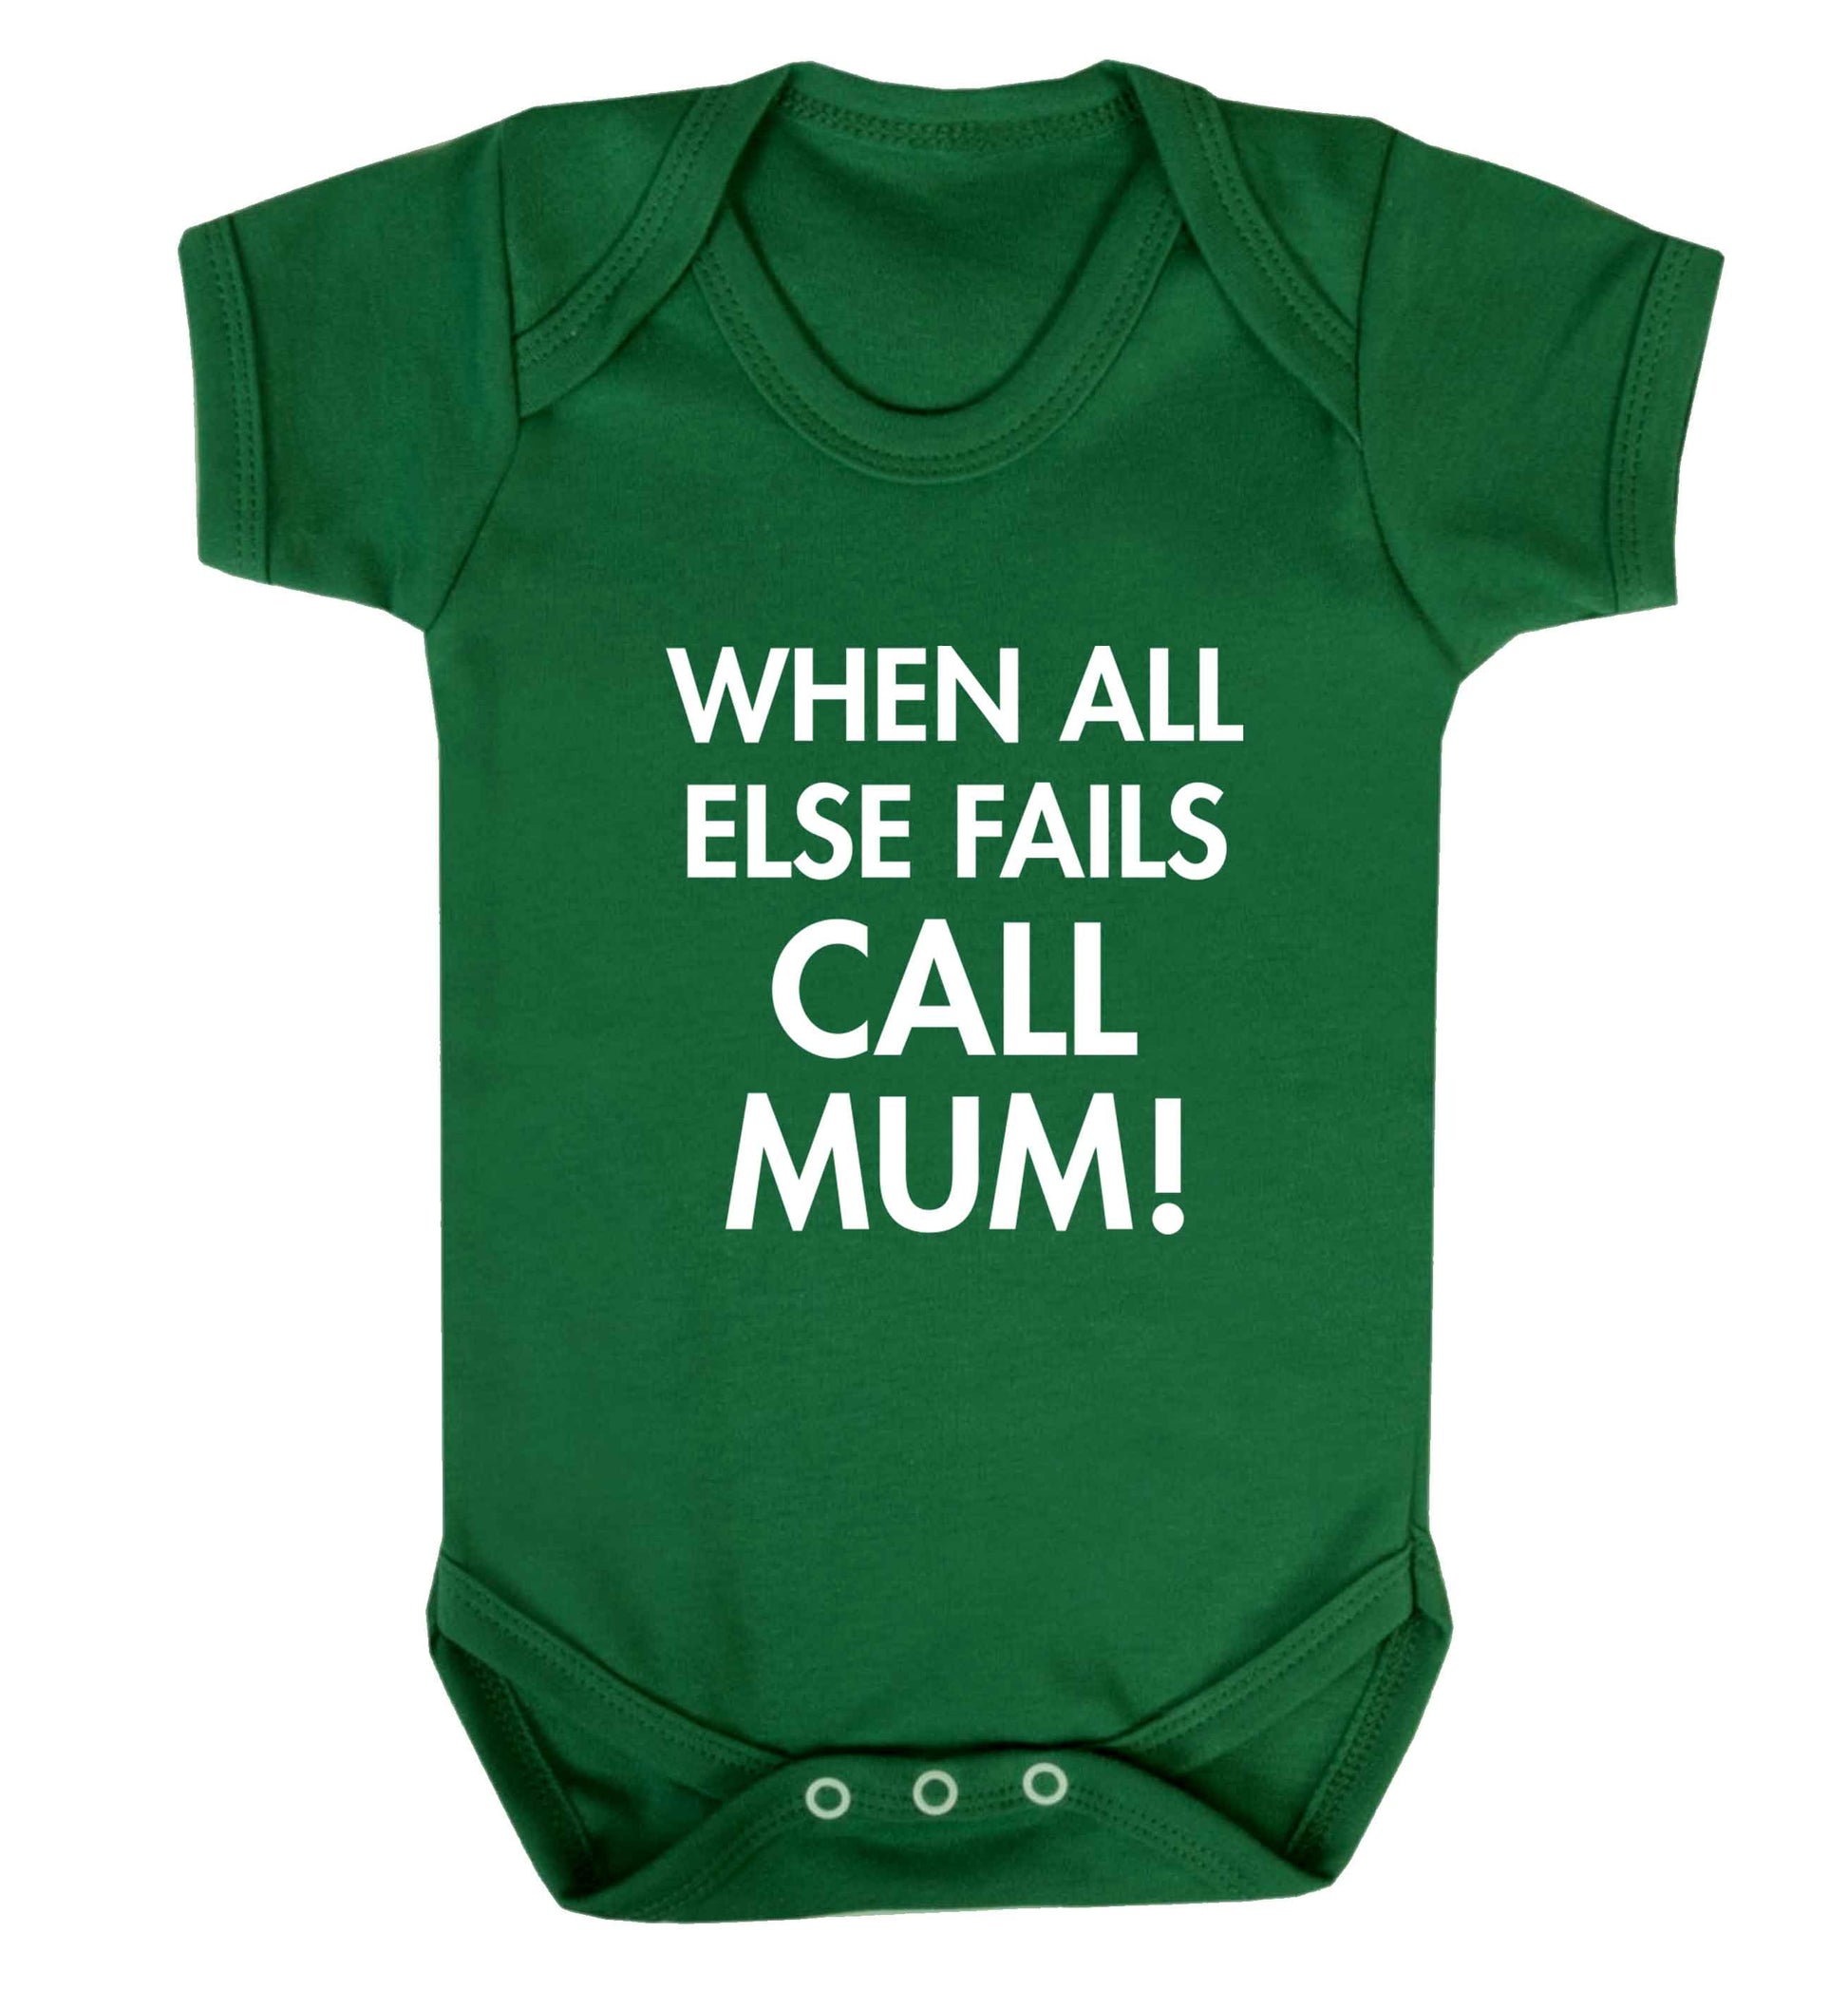 When all else fails call mum! baby vest green 18-24 months